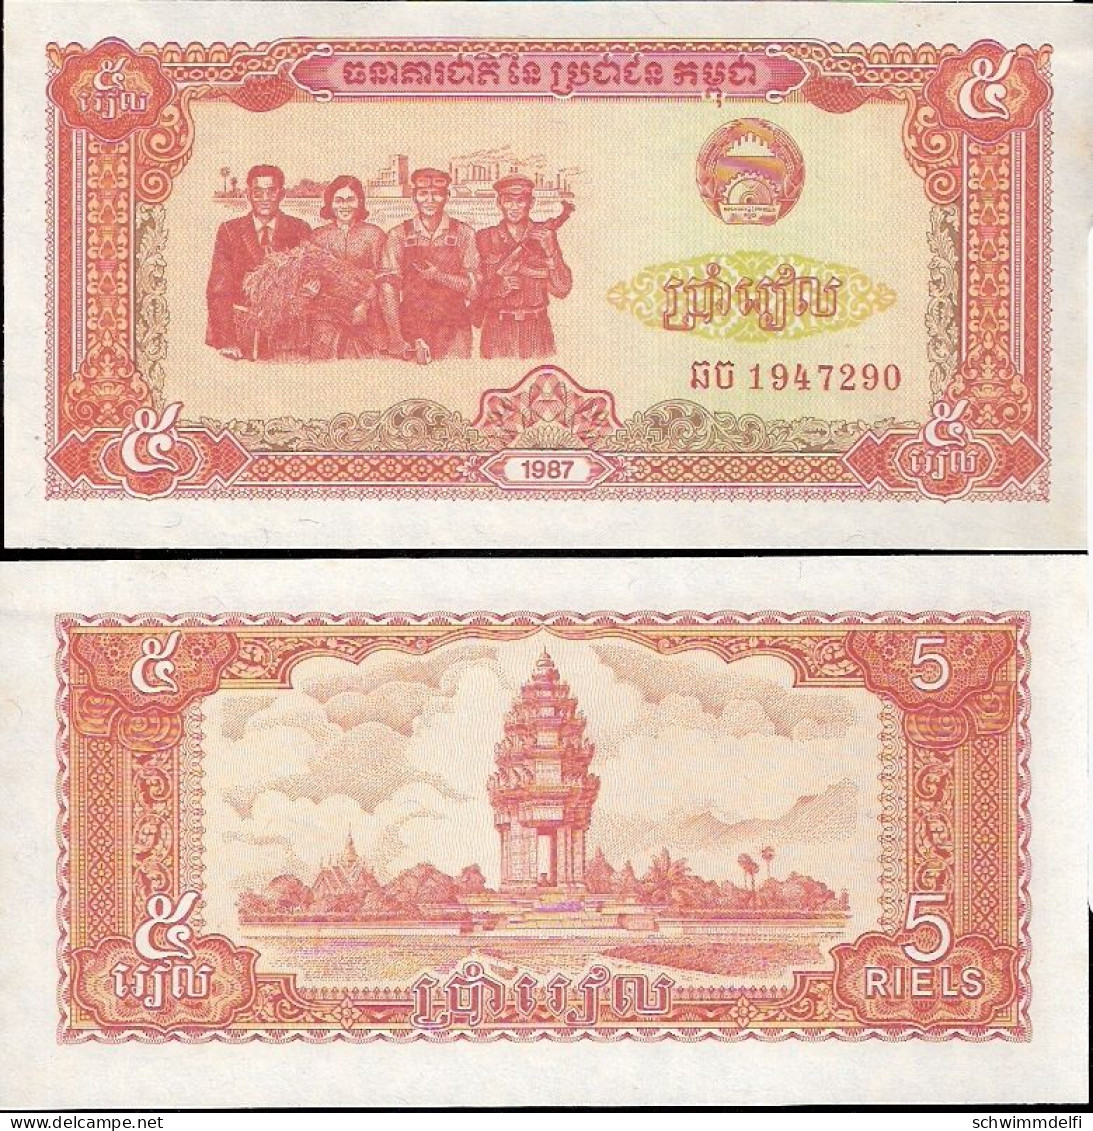 KAMBODSCHA, CAMBODIA, CAMBOYA - 5 RIELS 1987 - SIN CIRCULAR - UNZIRKULIERT - - Cambodia